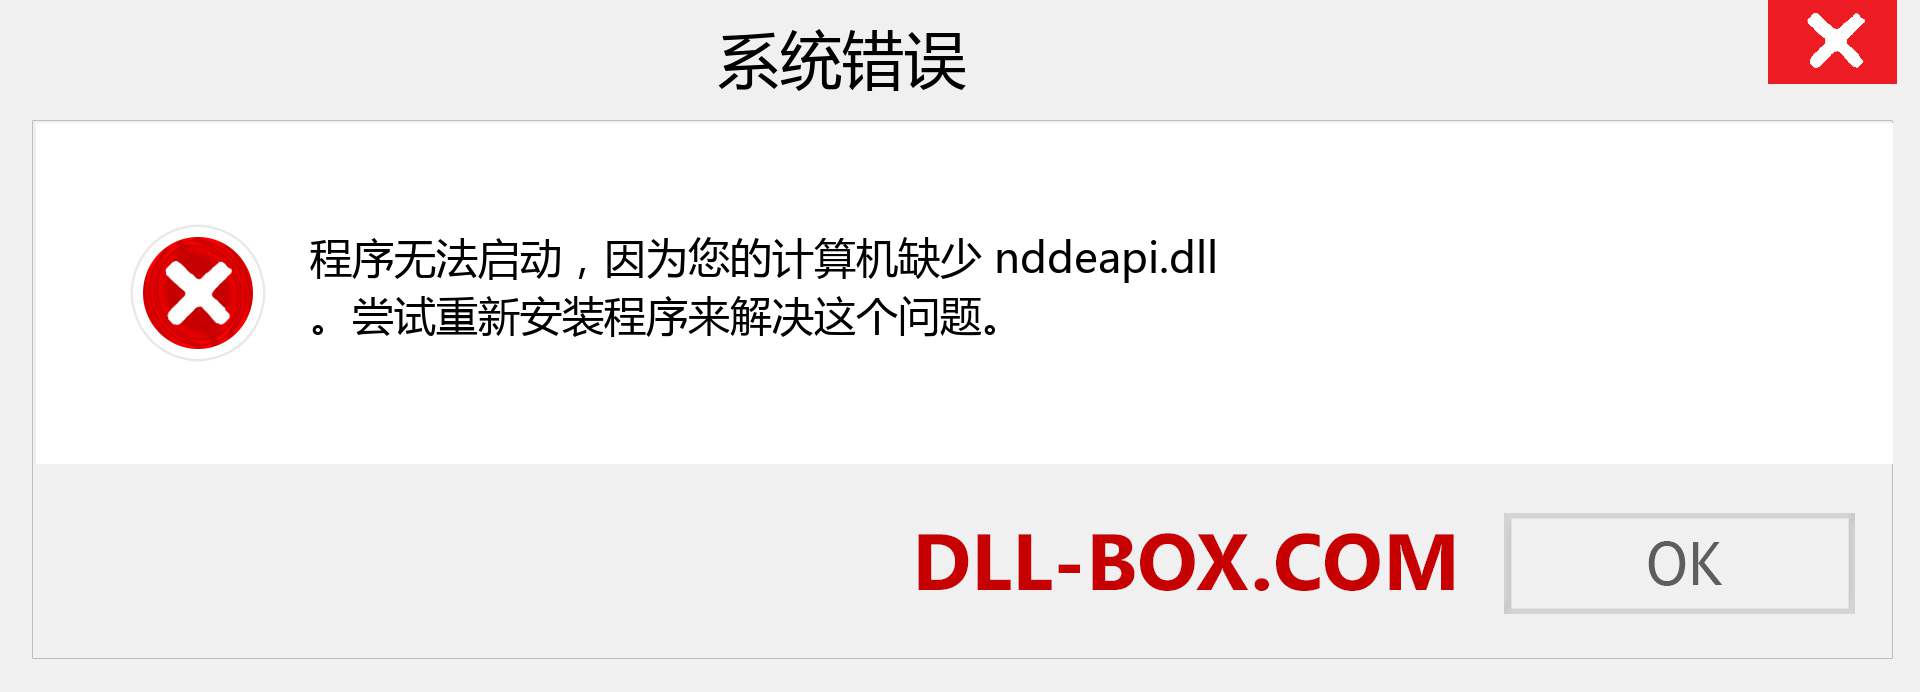 nddeapi.dll 文件丢失？。 适用于 Windows 7、8、10 的下载 - 修复 Windows、照片、图像上的 nddeapi dll 丢失错误